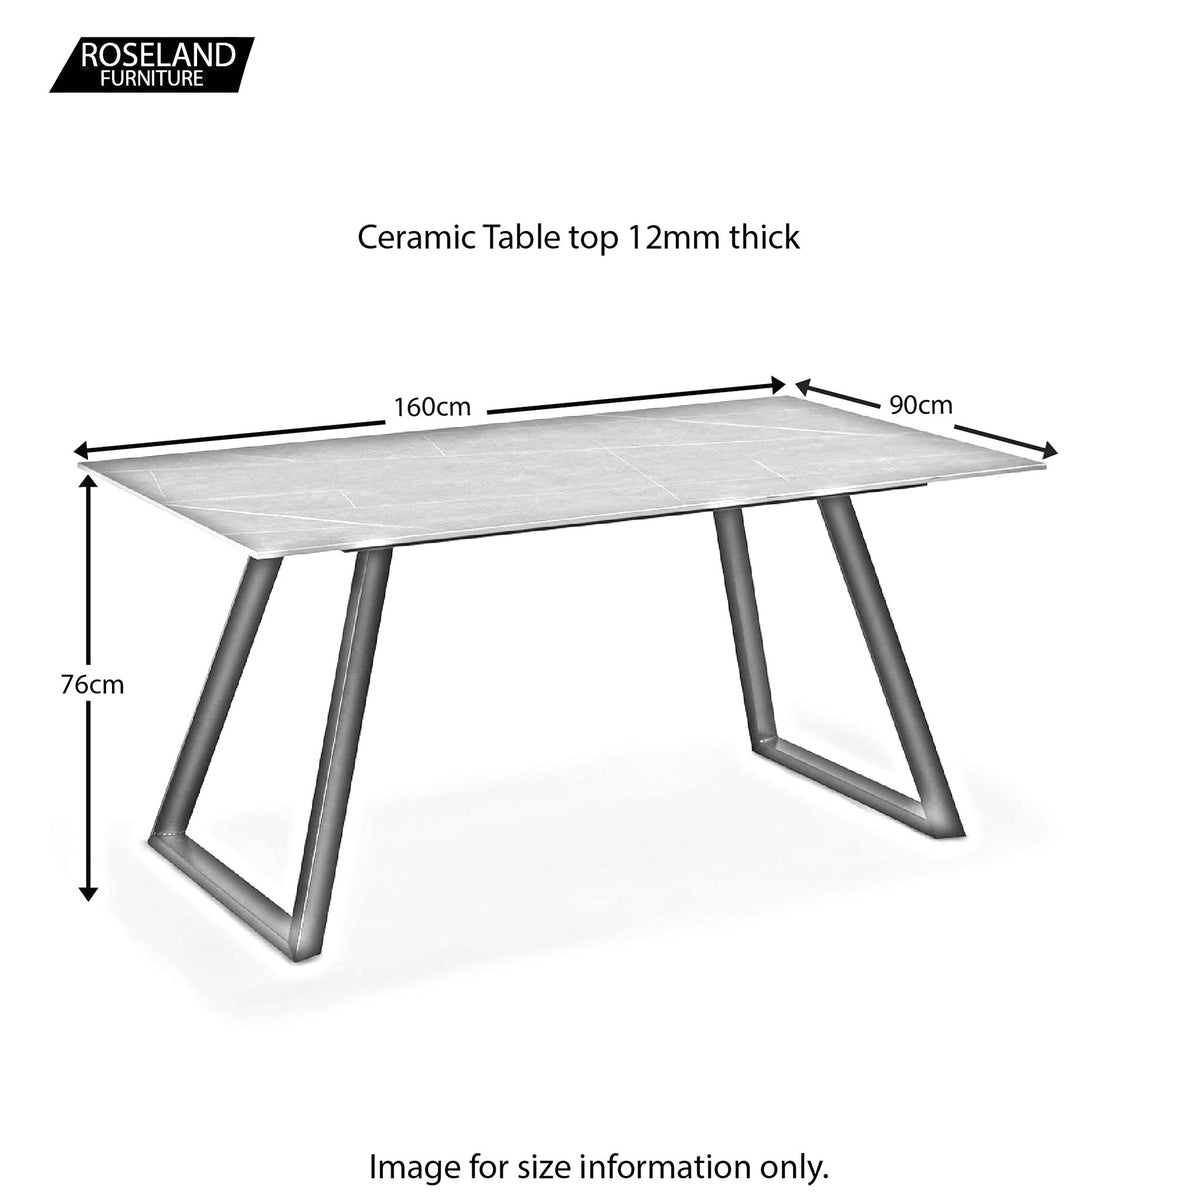 Milan 160cm Ceramic Dining Table Size Guide